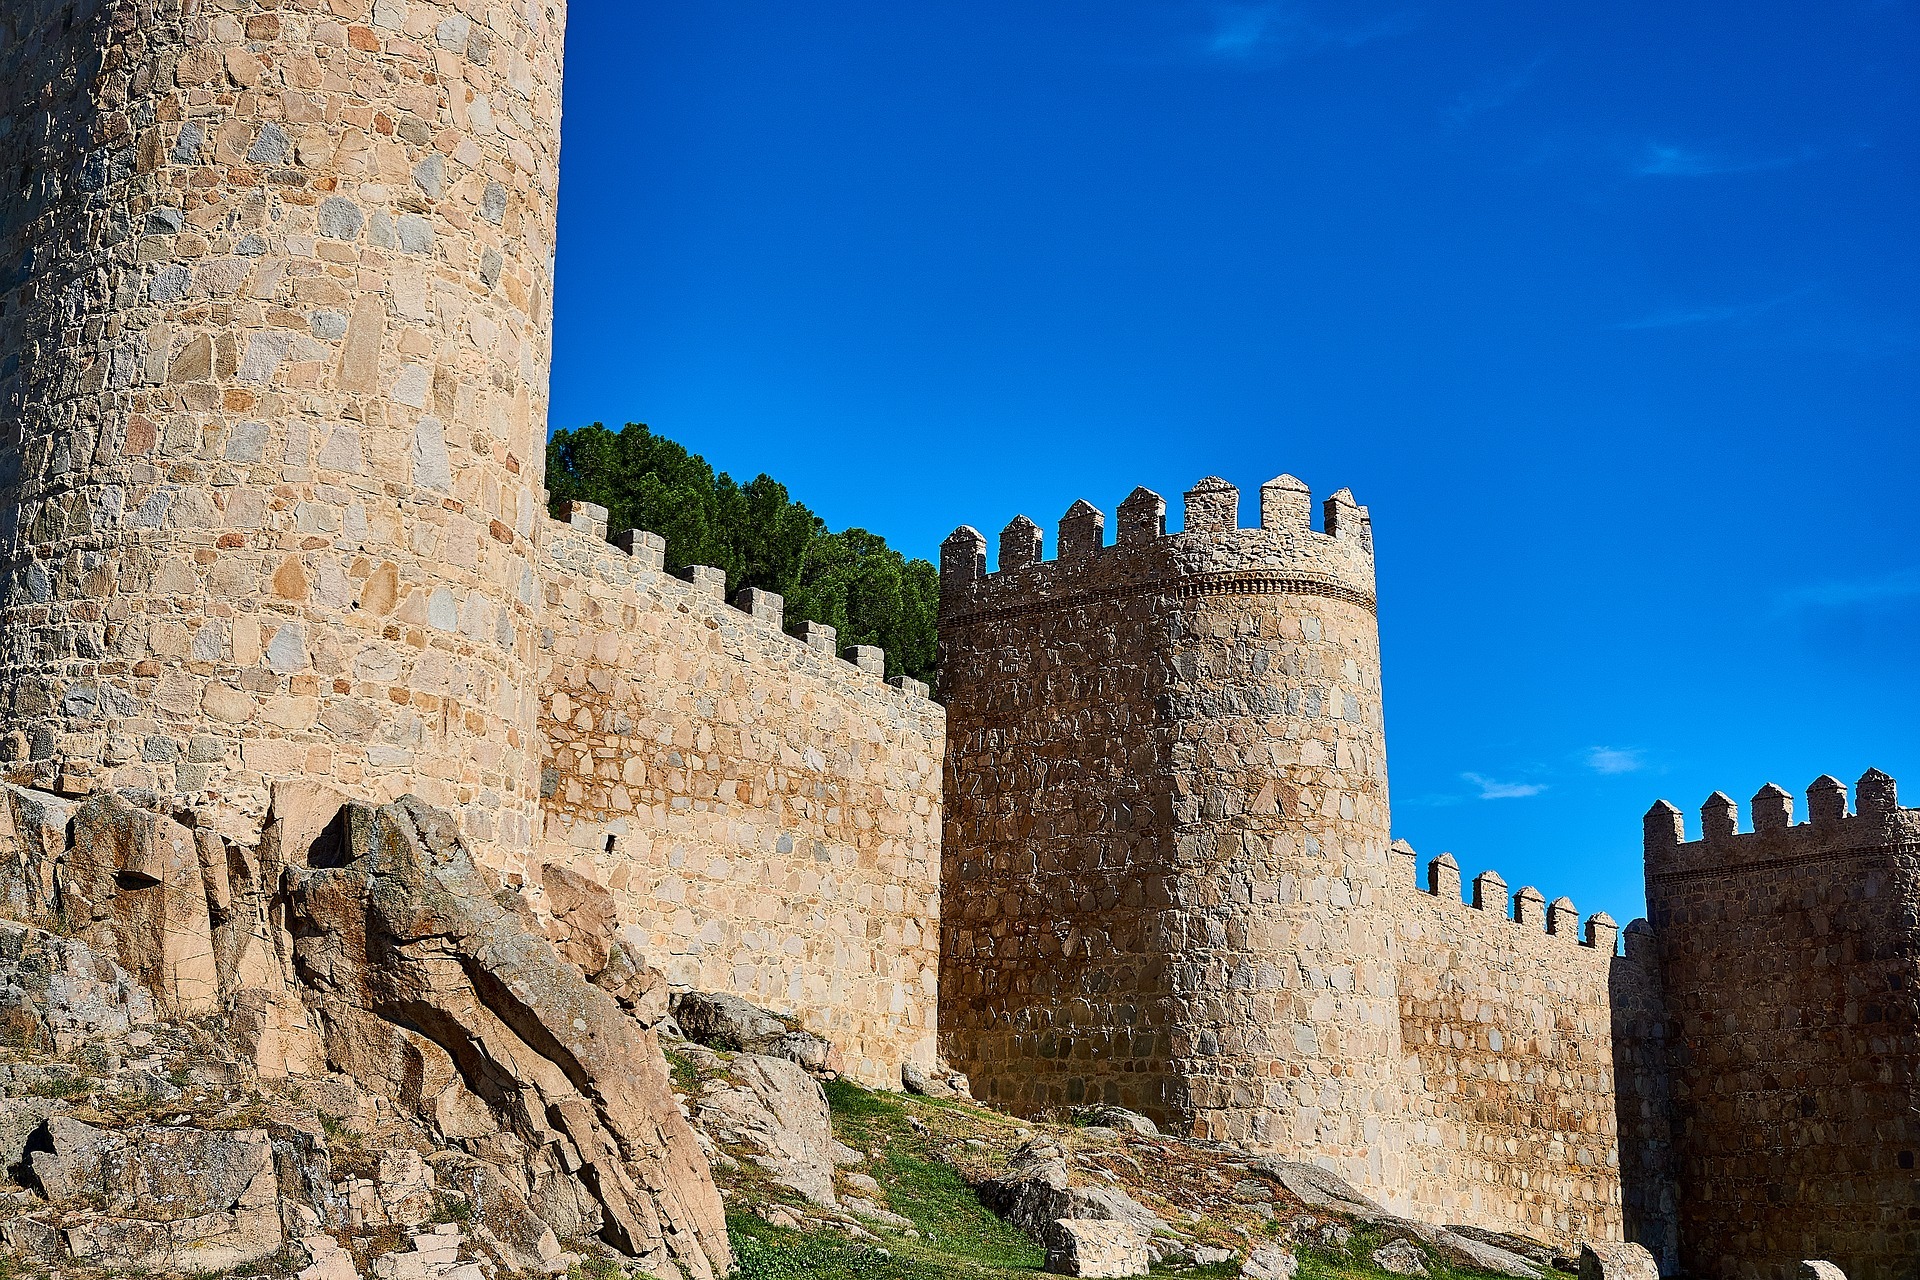 The Walls of Ávila